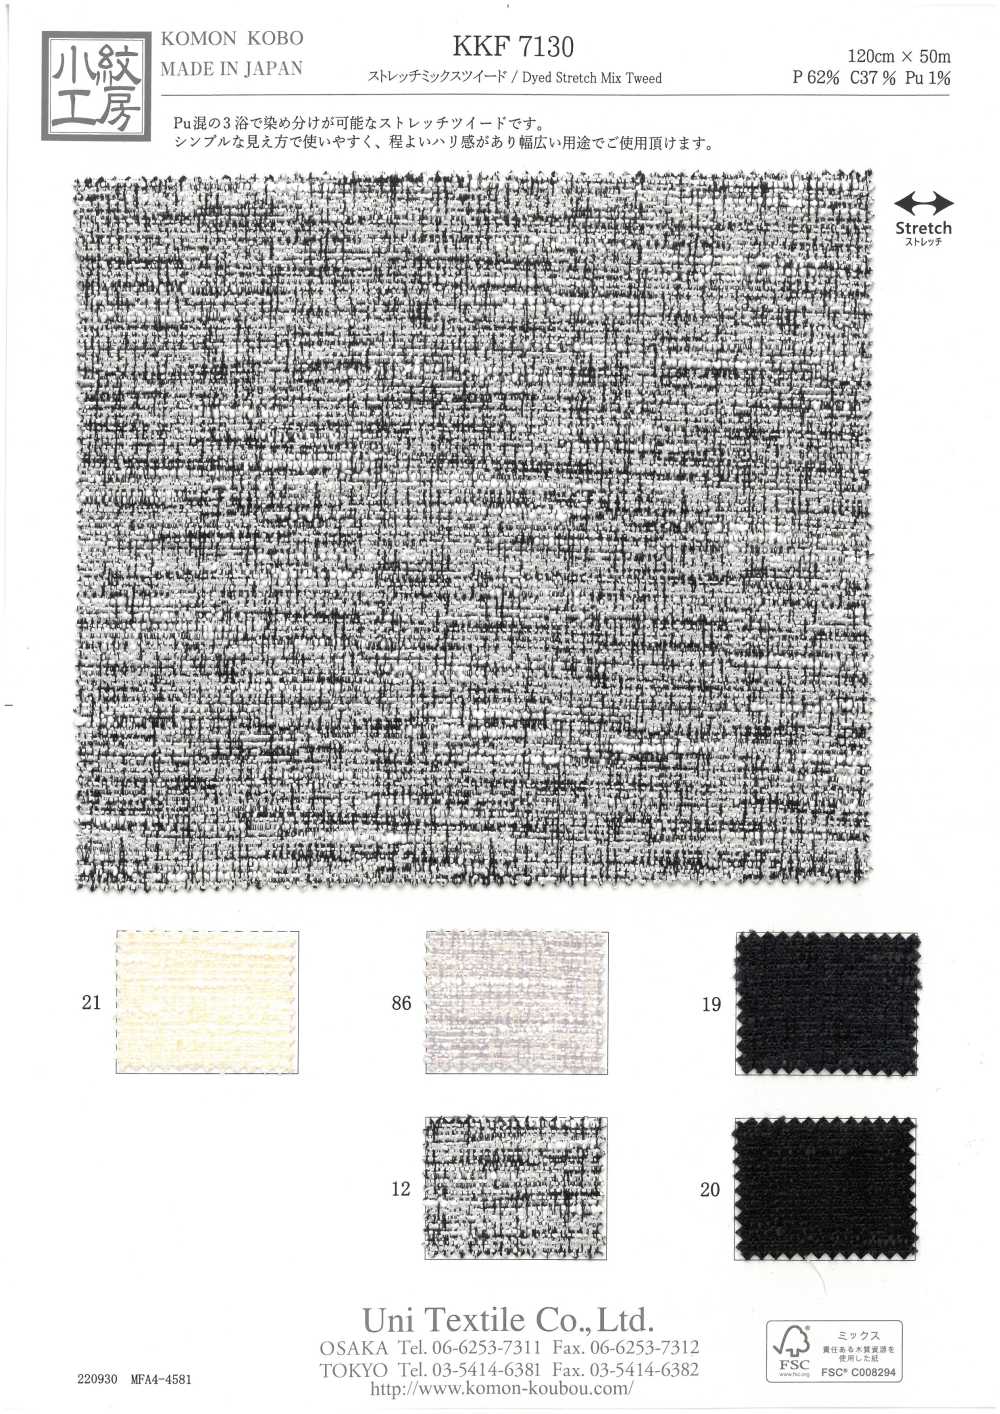 KKF7130 Sleek Mix Tweed[Textile / Fabric] Uni Textile